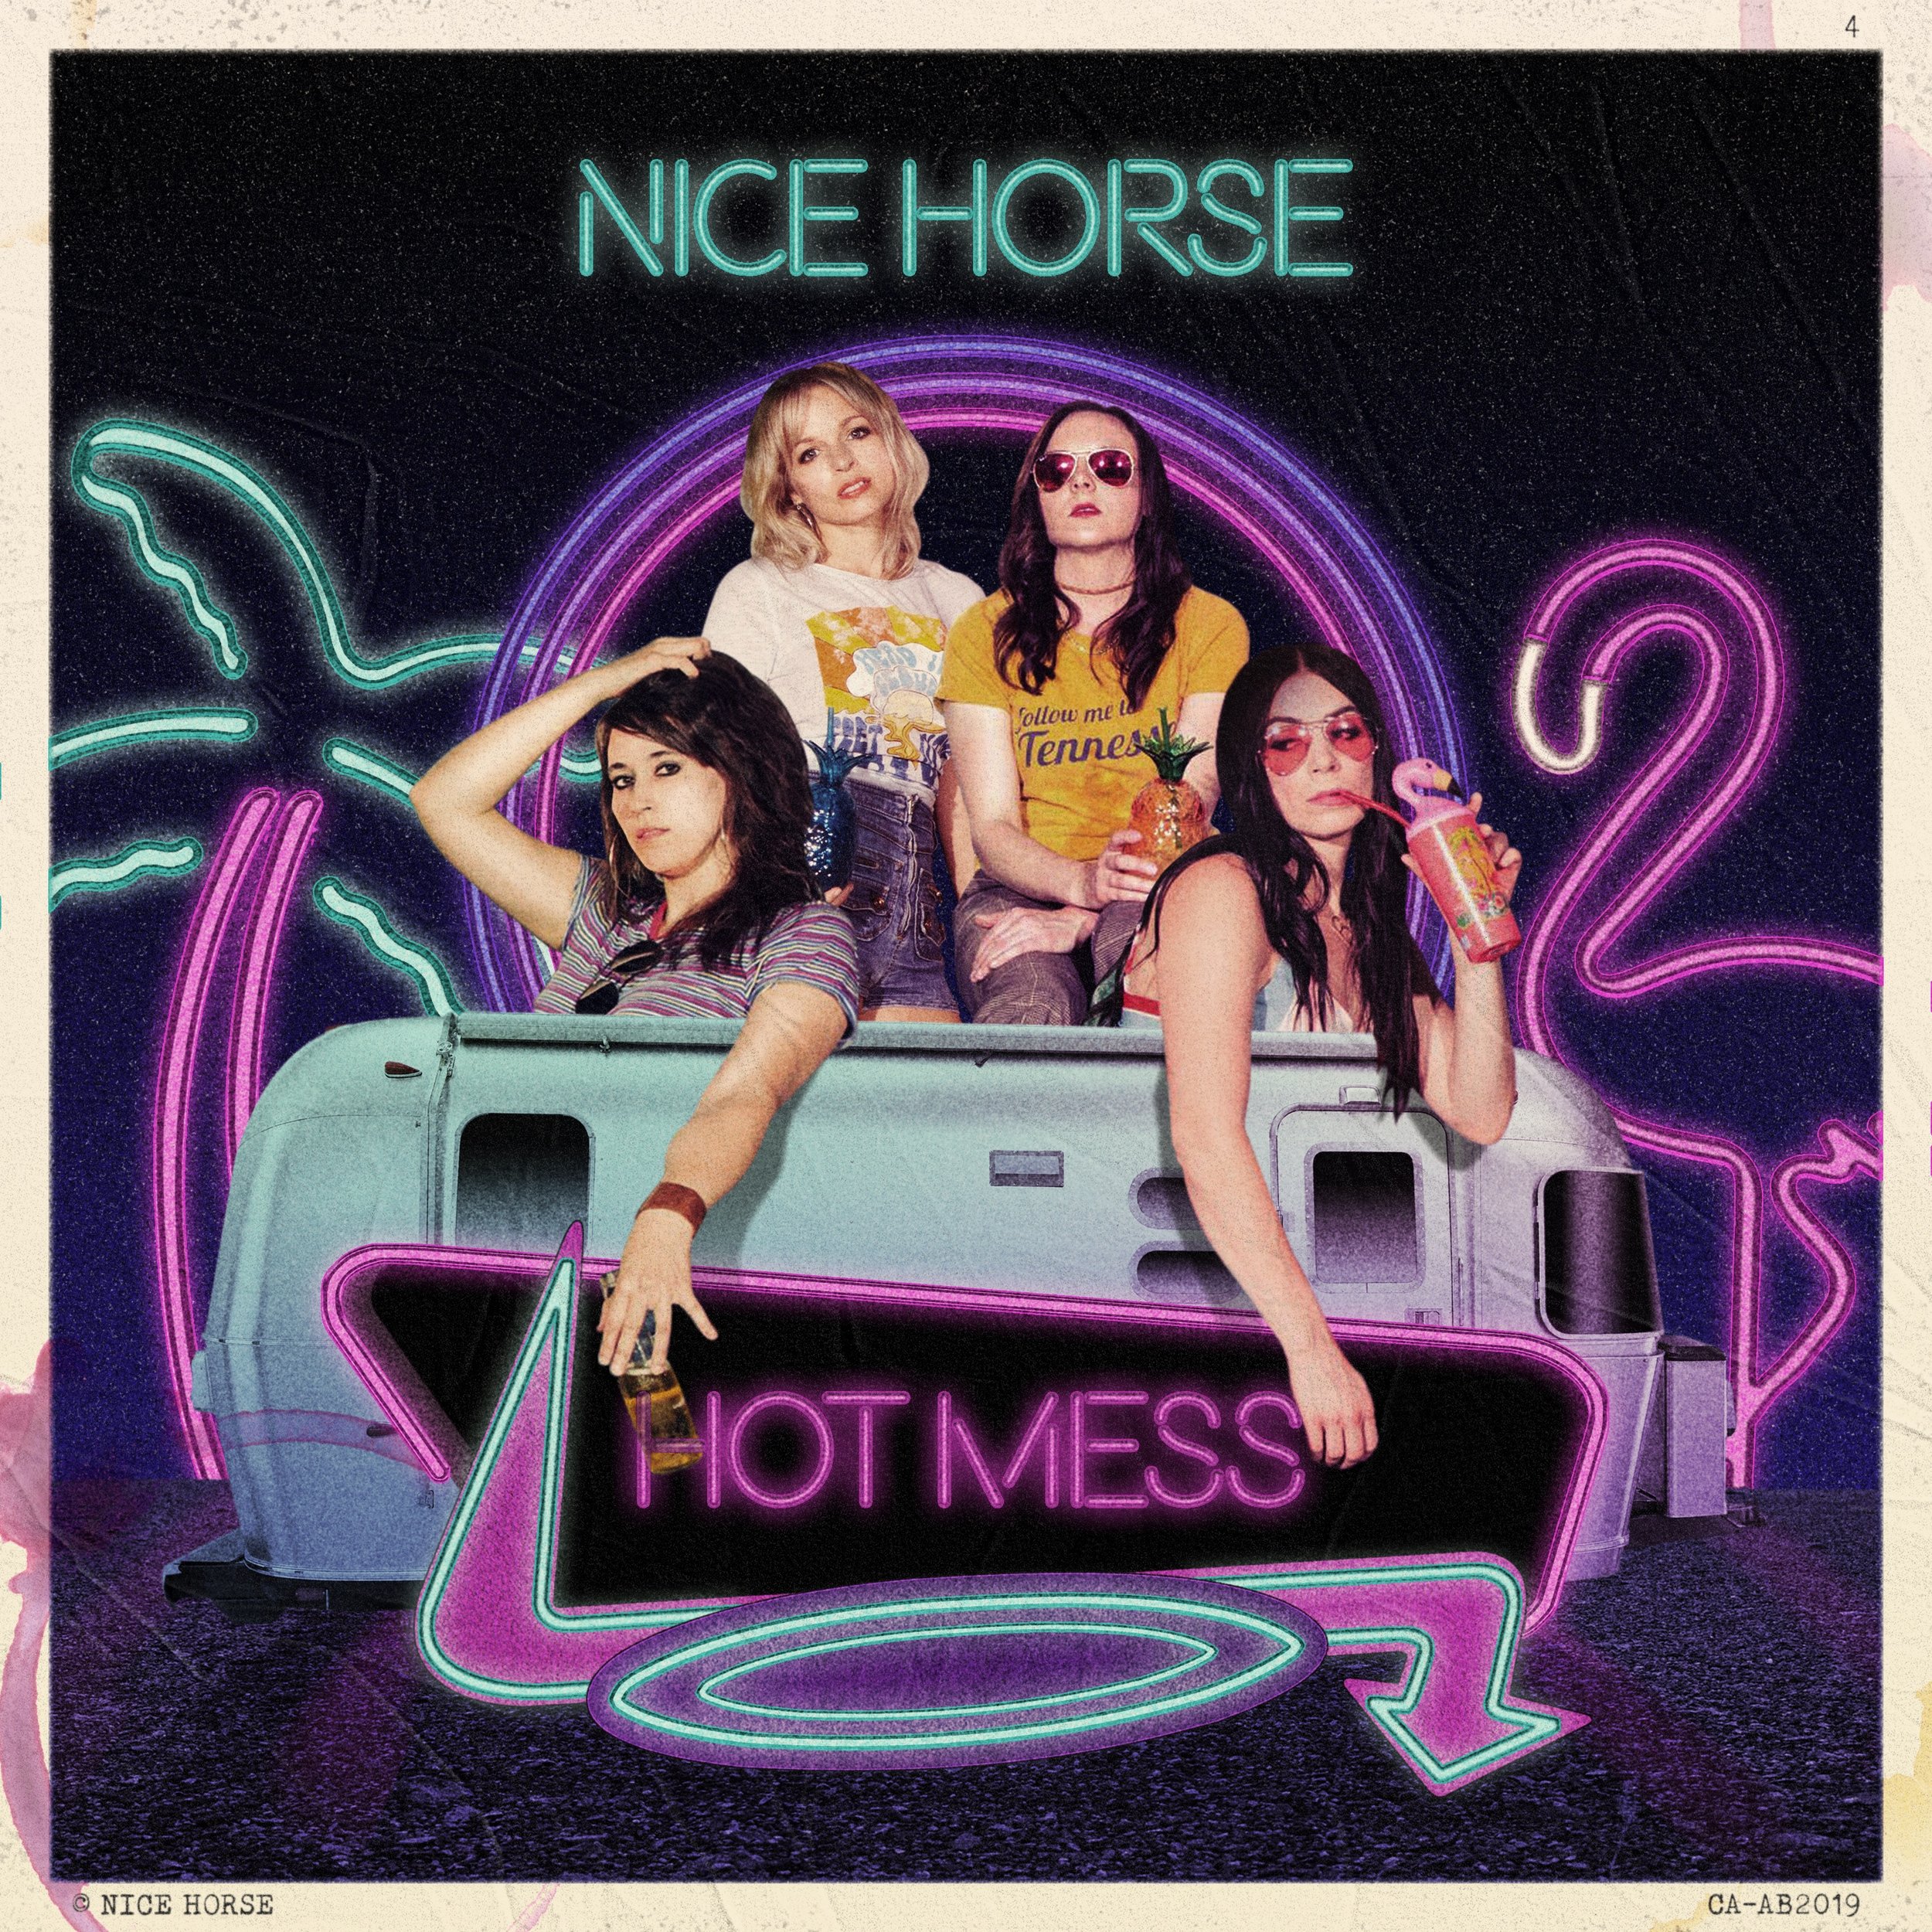 2020-03 Nice Horse - Hot Mess single art.jpg